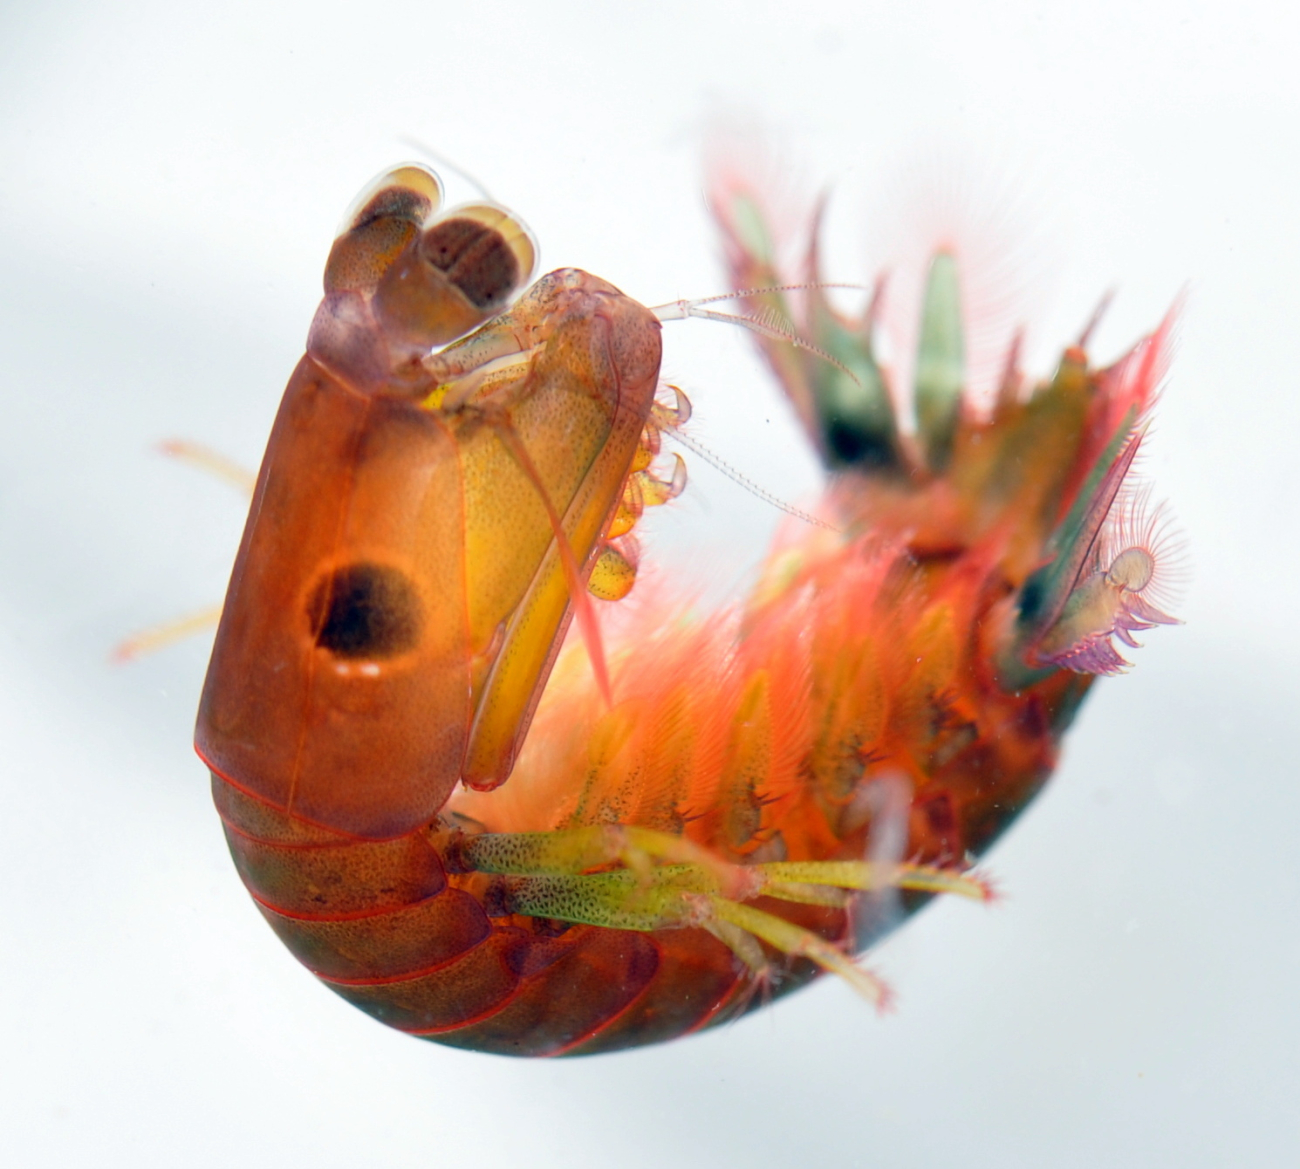 A mantis shrimp of the order Stomatopoda - commonly called a stomatopod